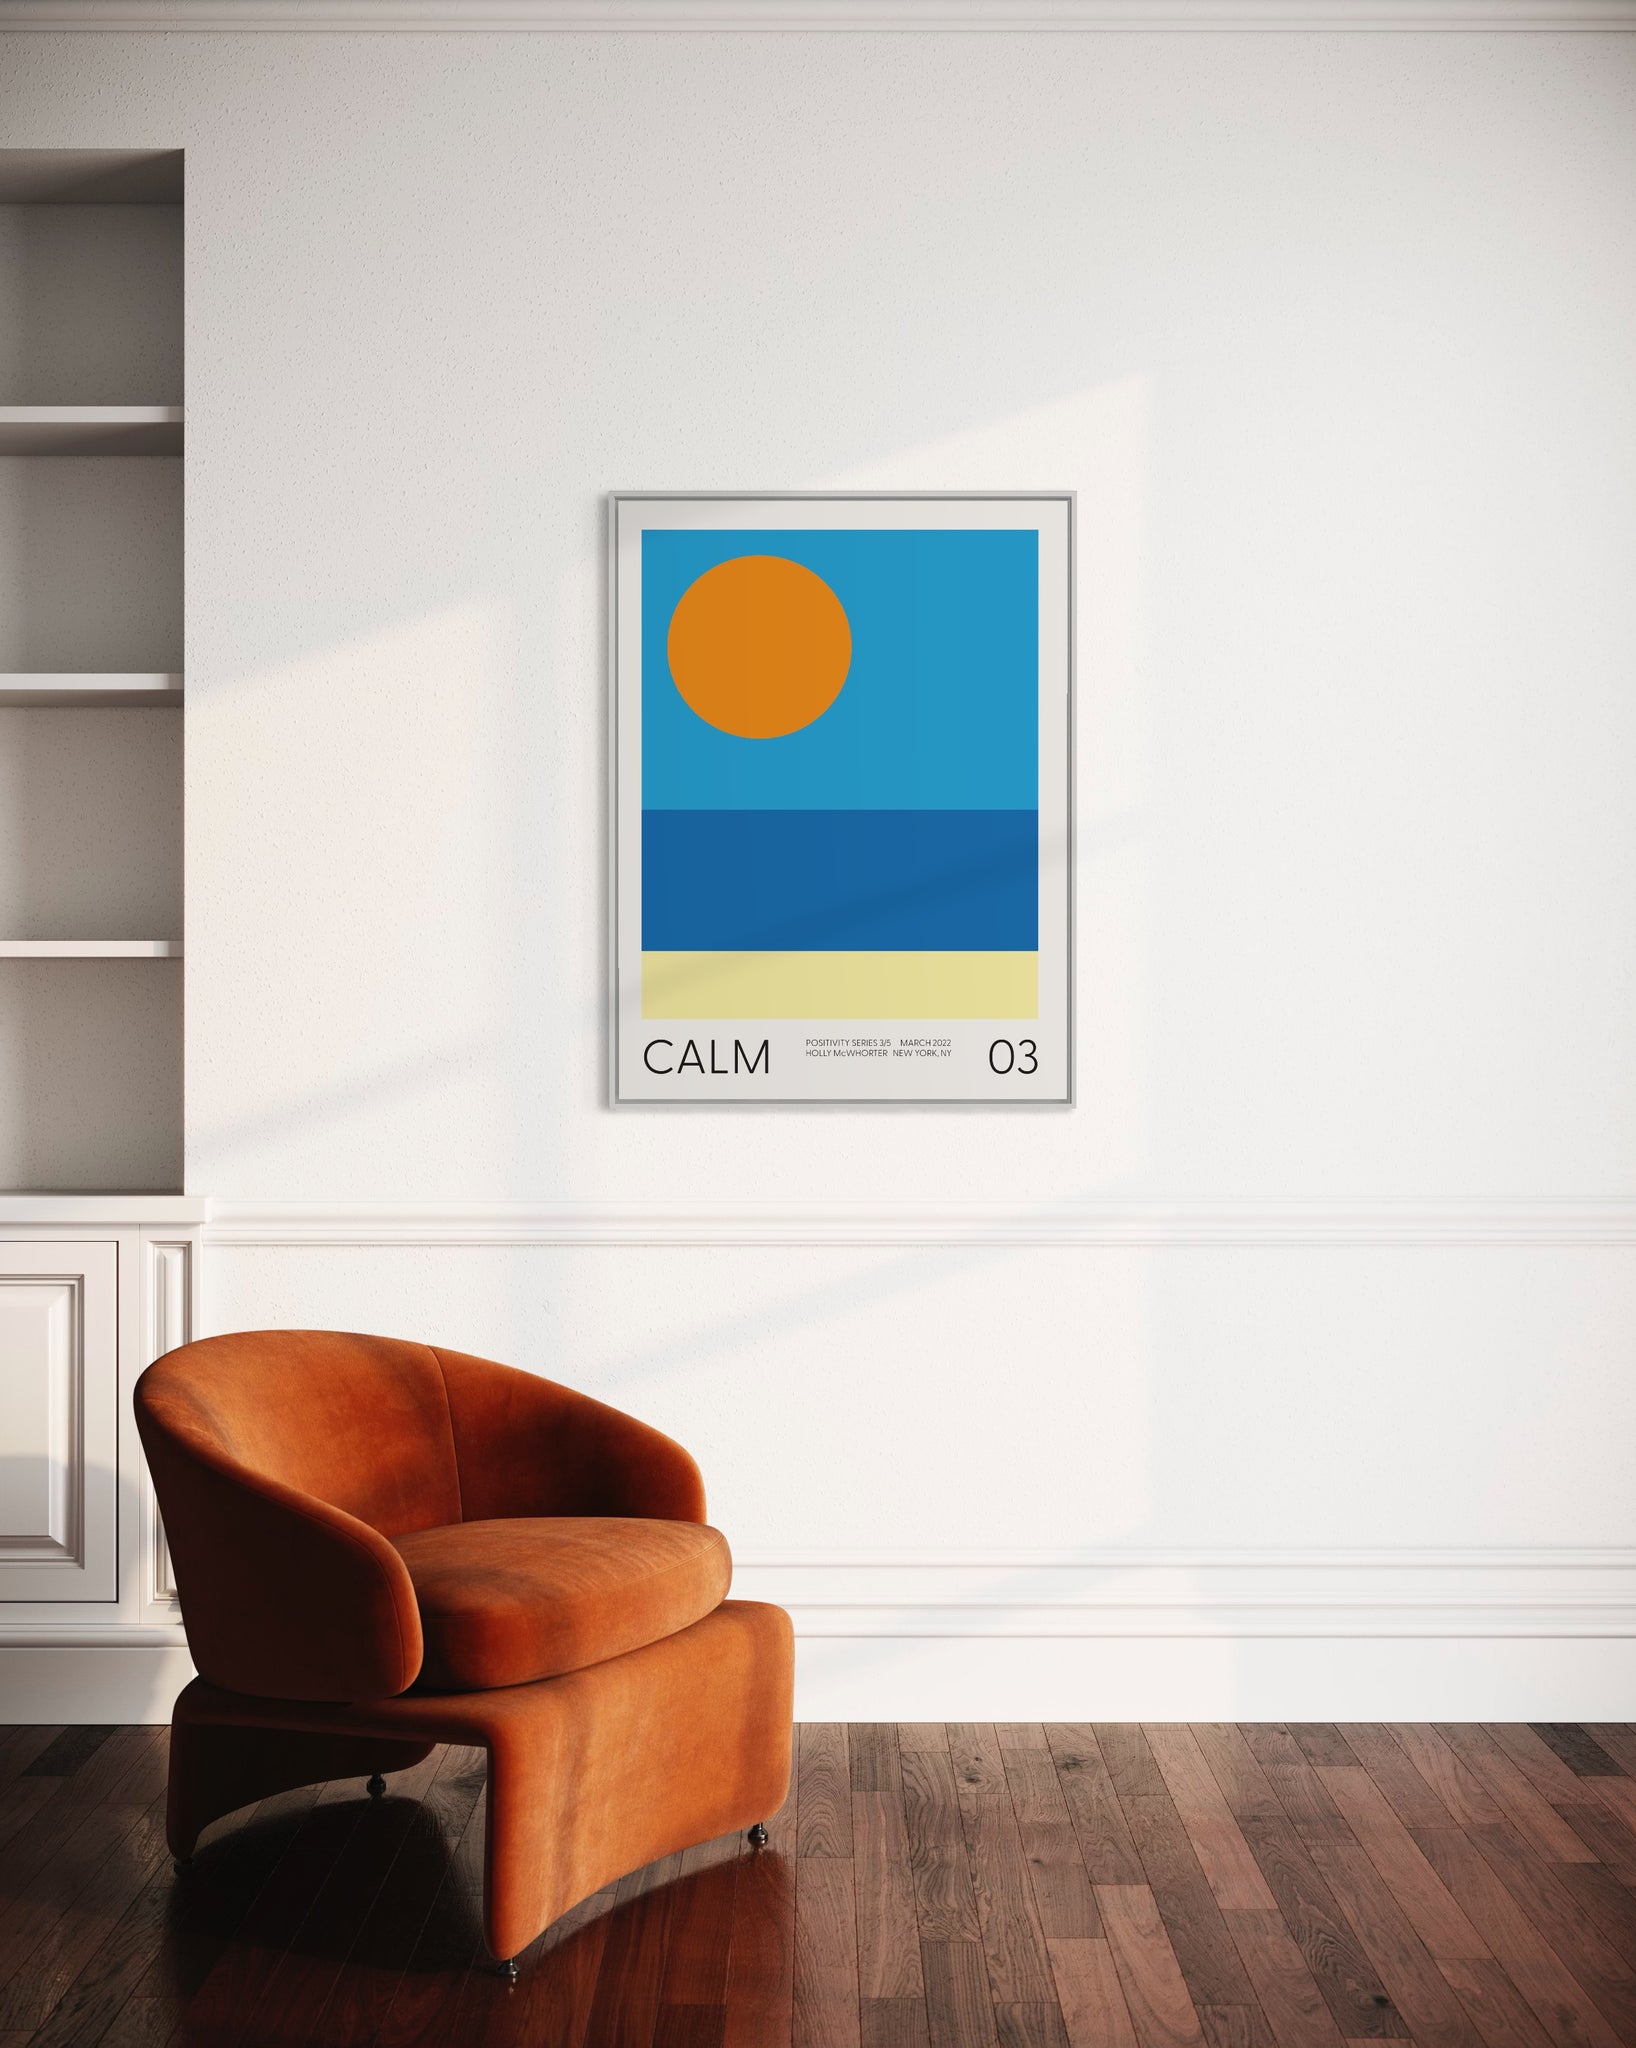 Positivity Series #3: CALM - Fine Art Giclée Print by Holly McWhorter